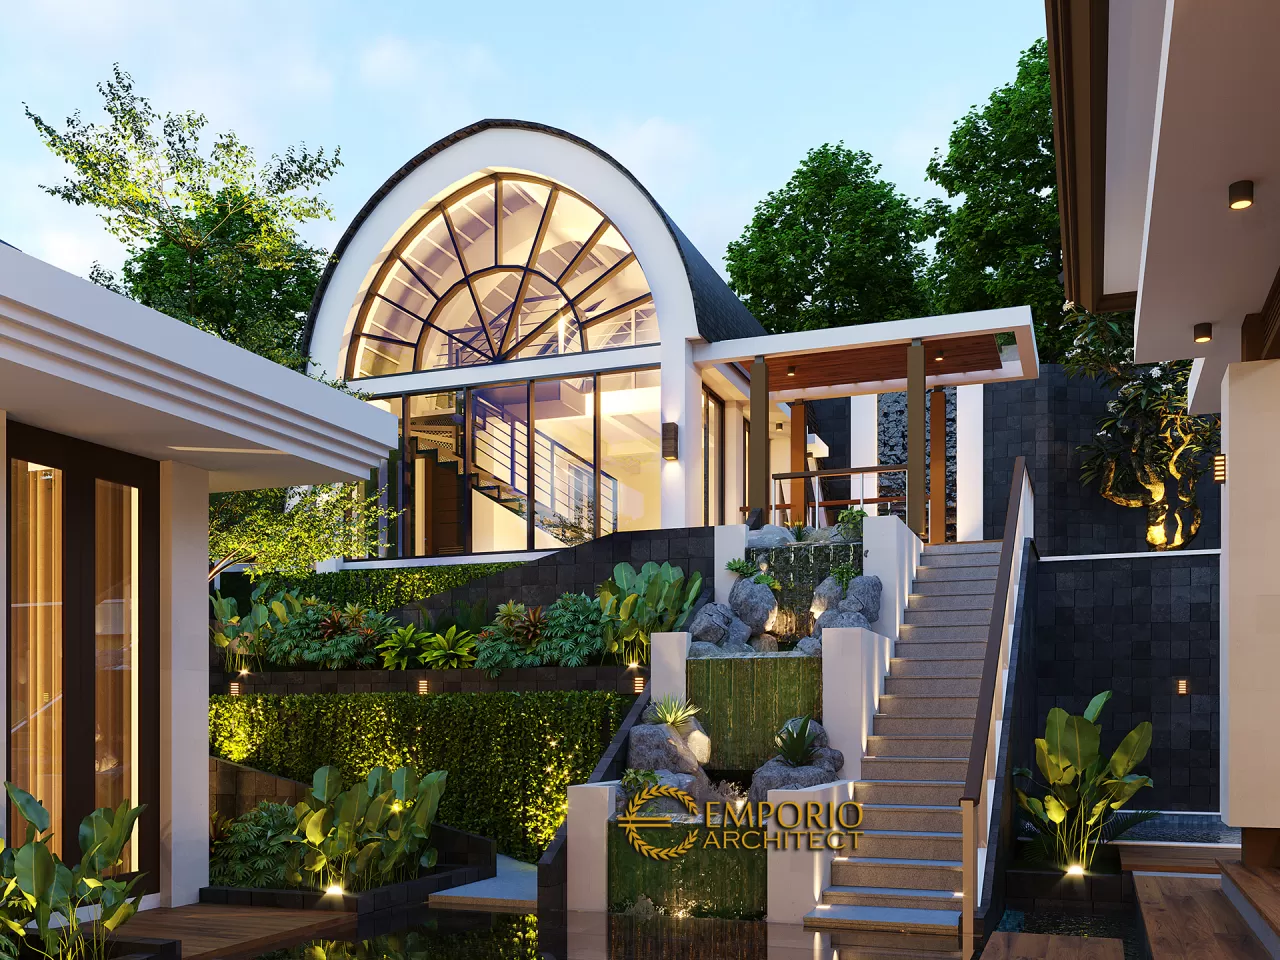 Intip Kerennya Desain Interior Rumah Mewah 2 Lantai Bergaya Villa Bali Di Bandung Ini Nuansa Villa Balinya Dapet Banget Part 1 Blog